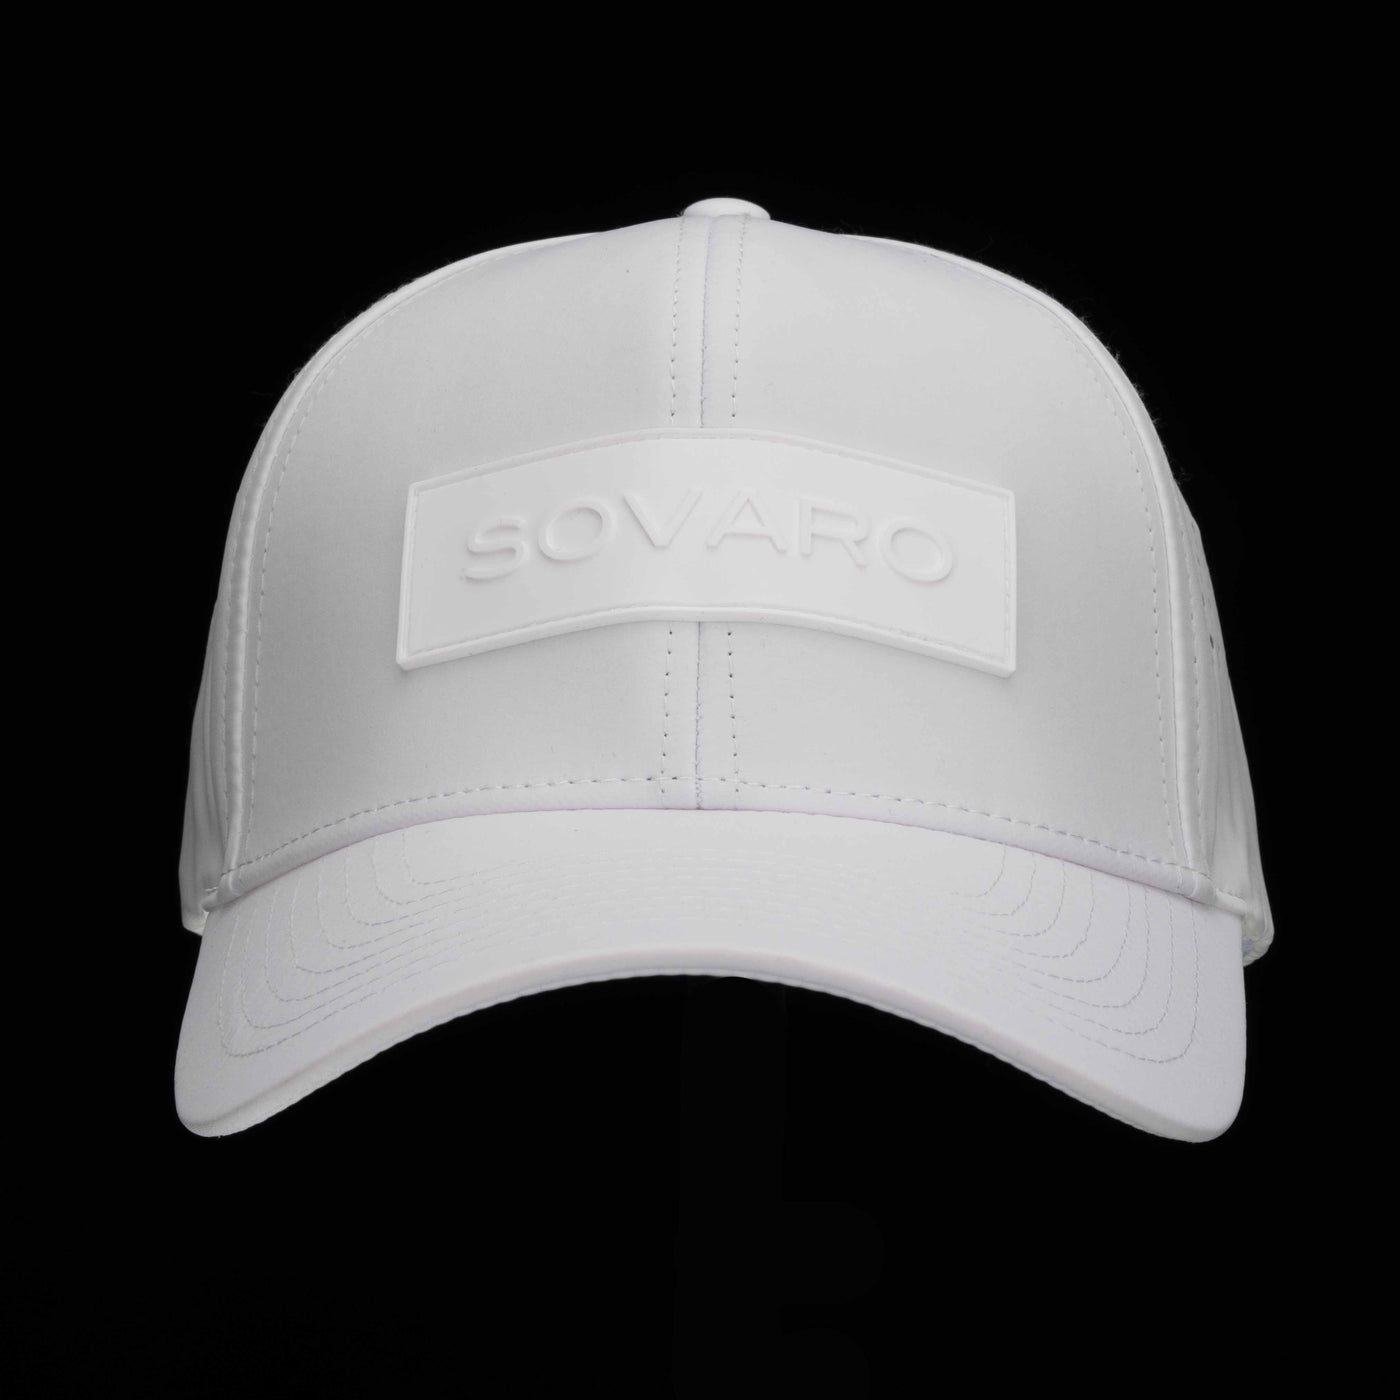 Sovaro Performance Hat